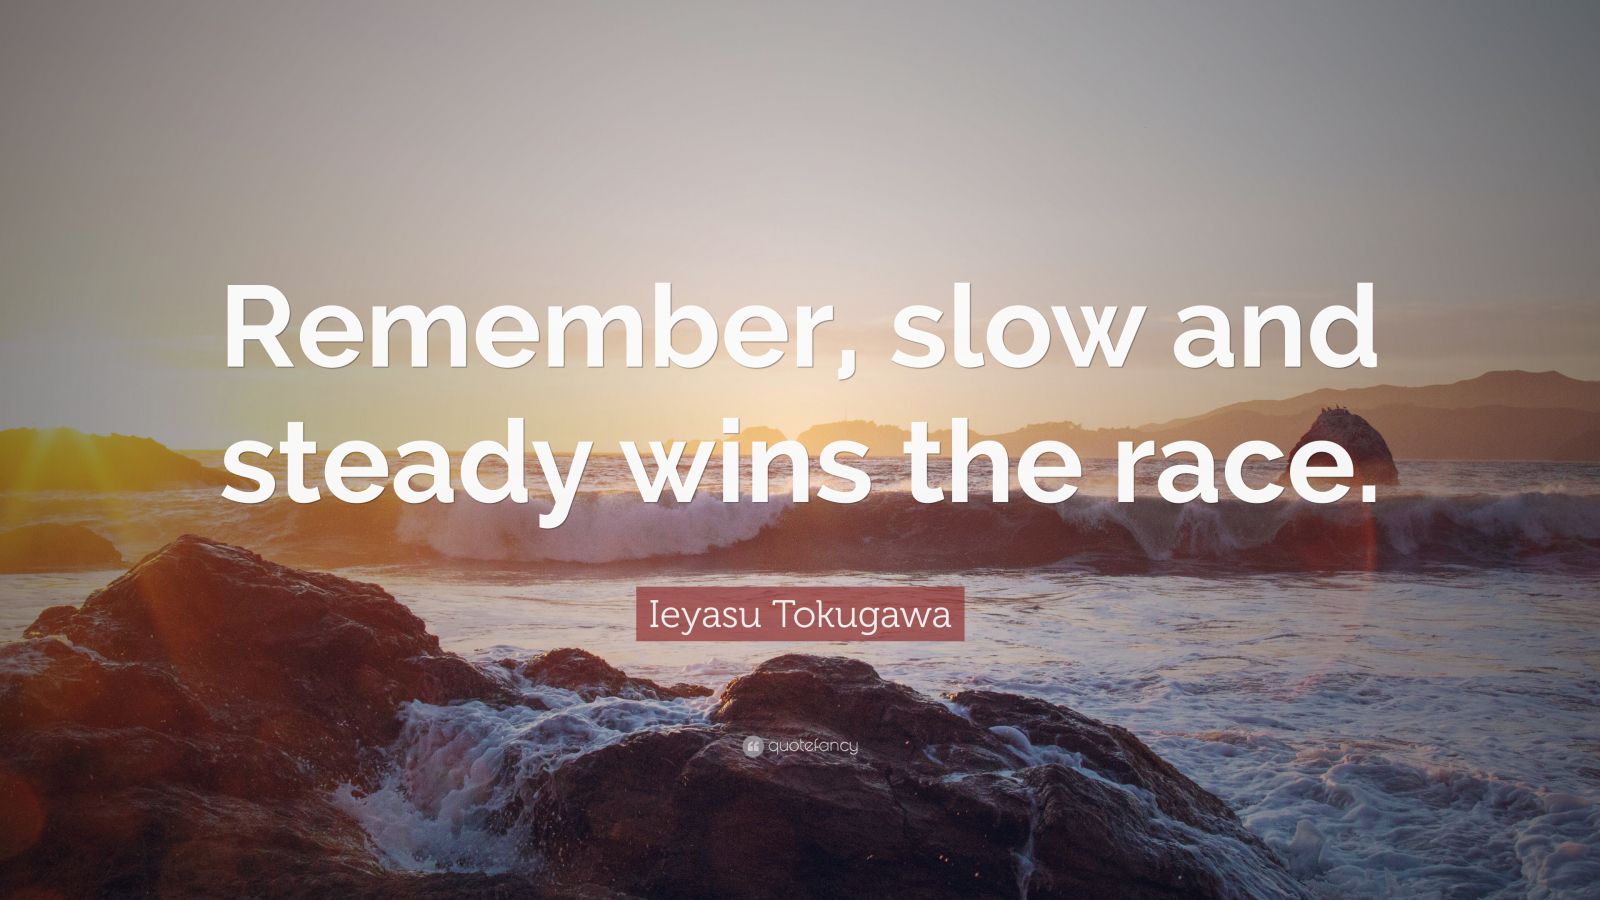 Ieyasu Tokugawa Quote: “Remember, slow and steady wins the race.” (12